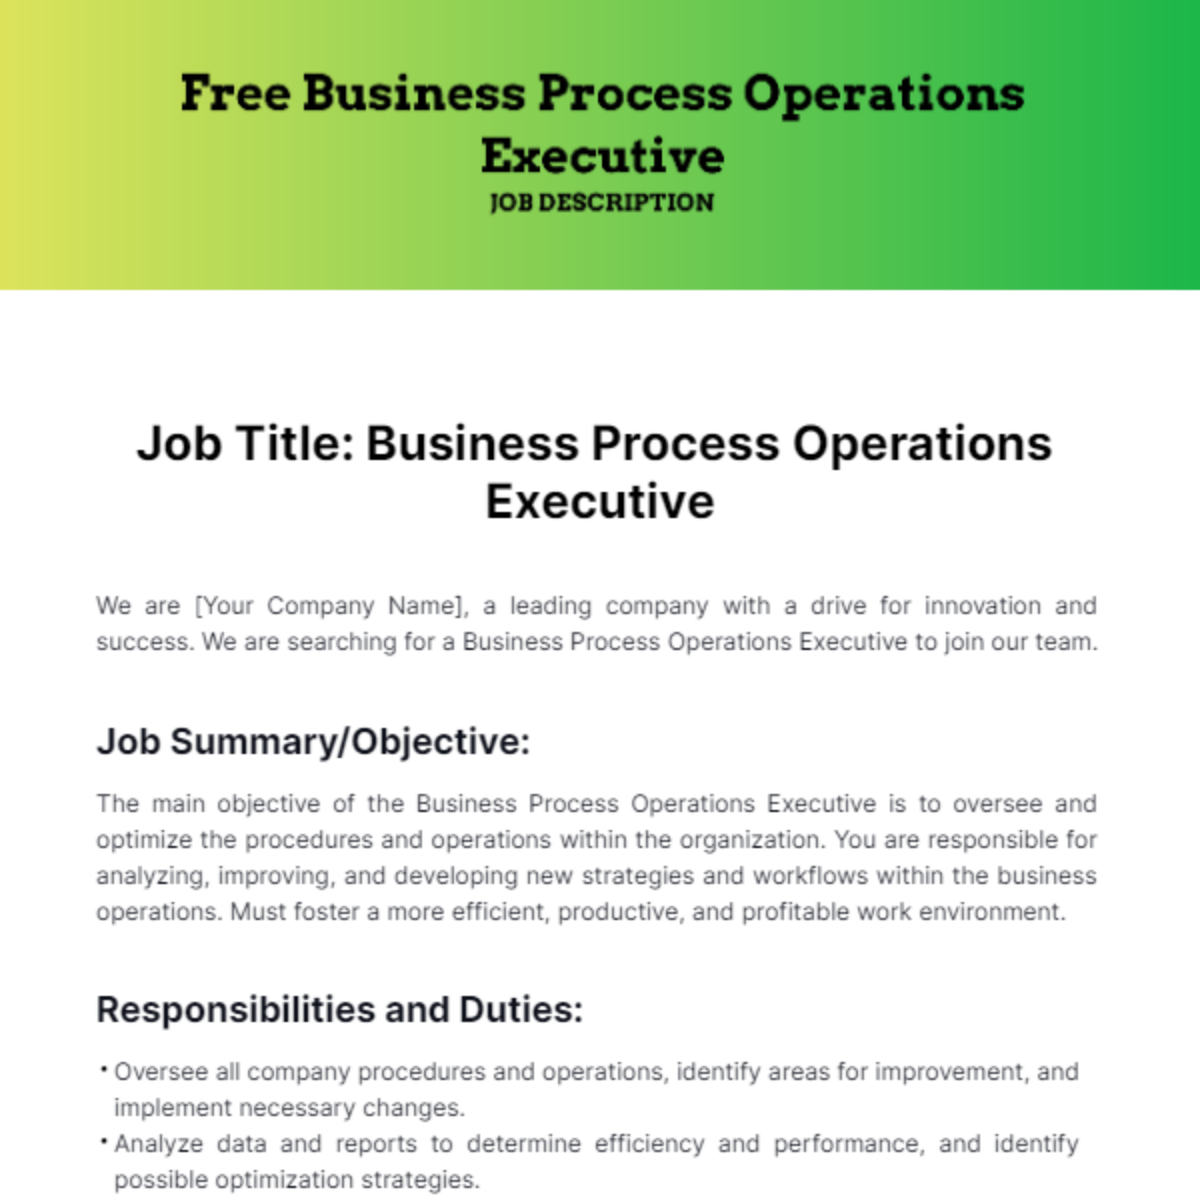 Free Business Process Operations Executive Job Description Template